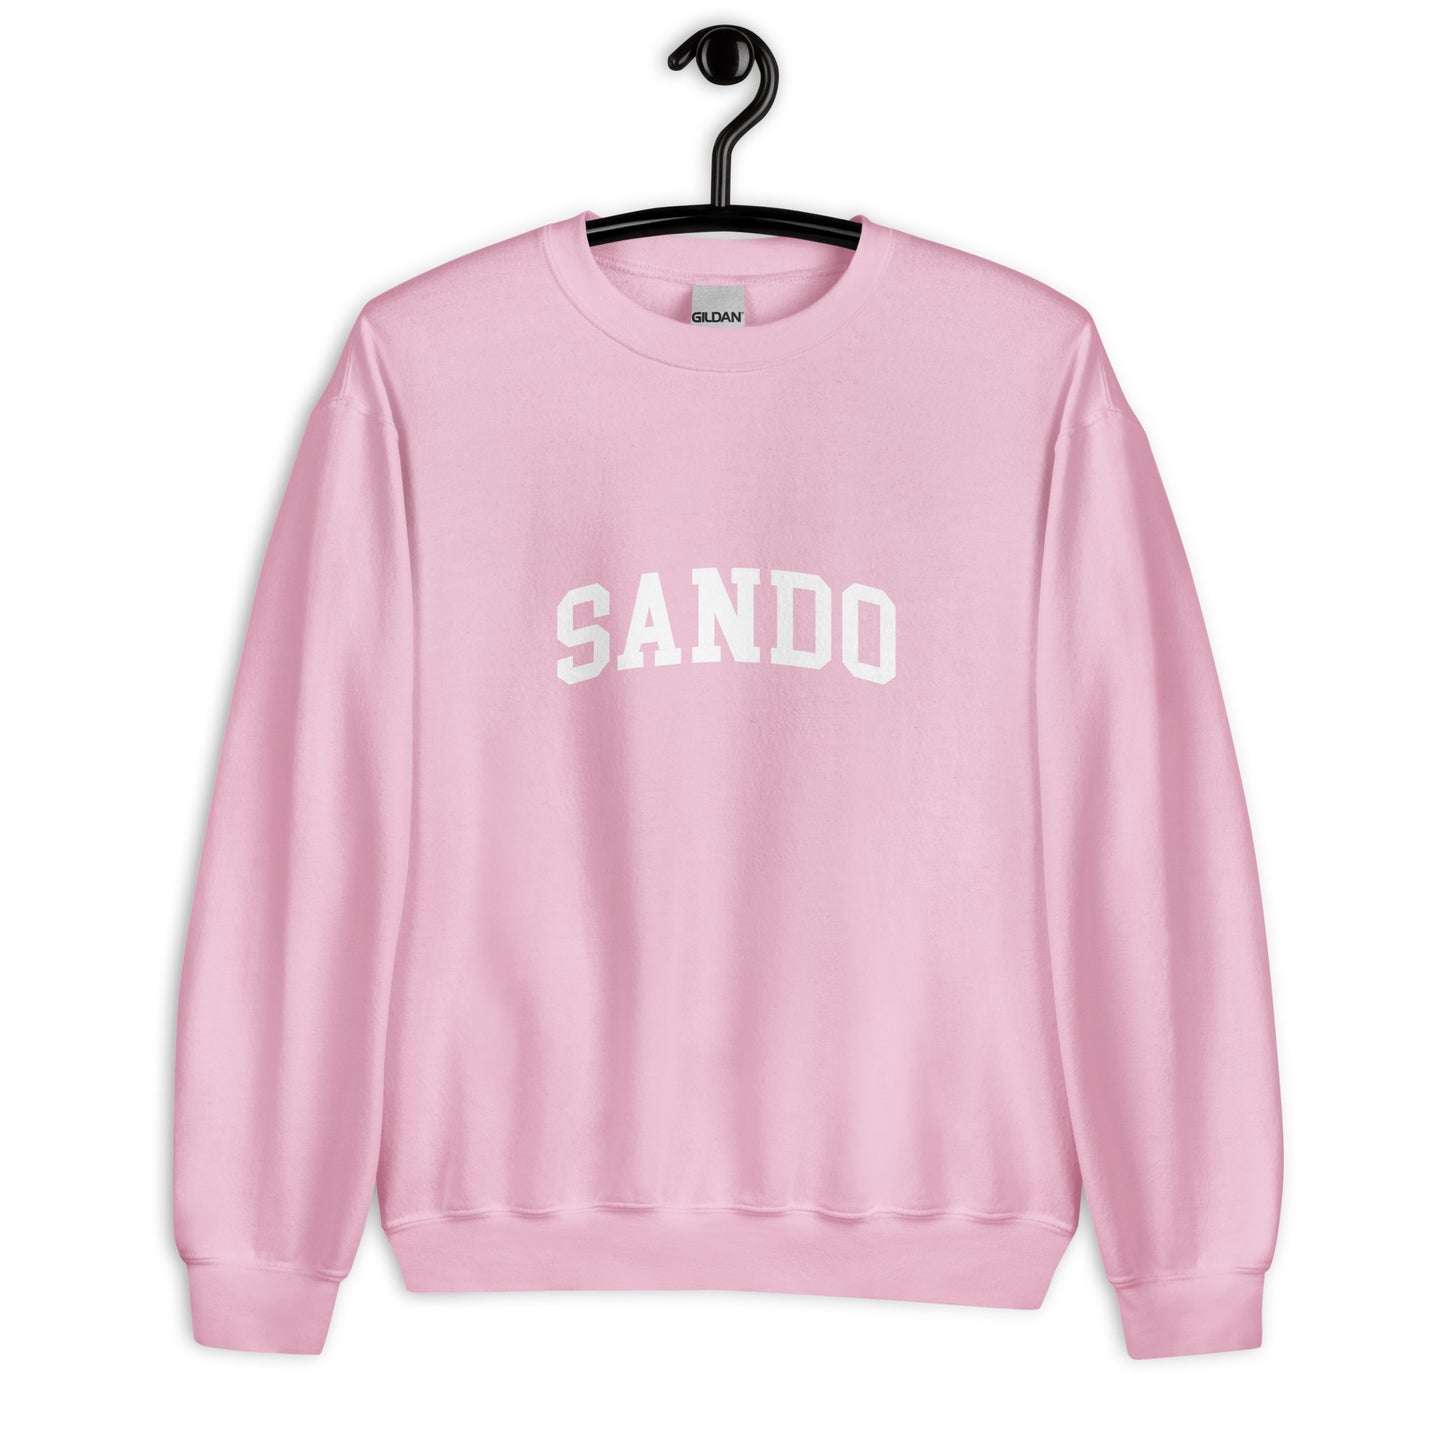 Sando Sweatshirt - Arched Font